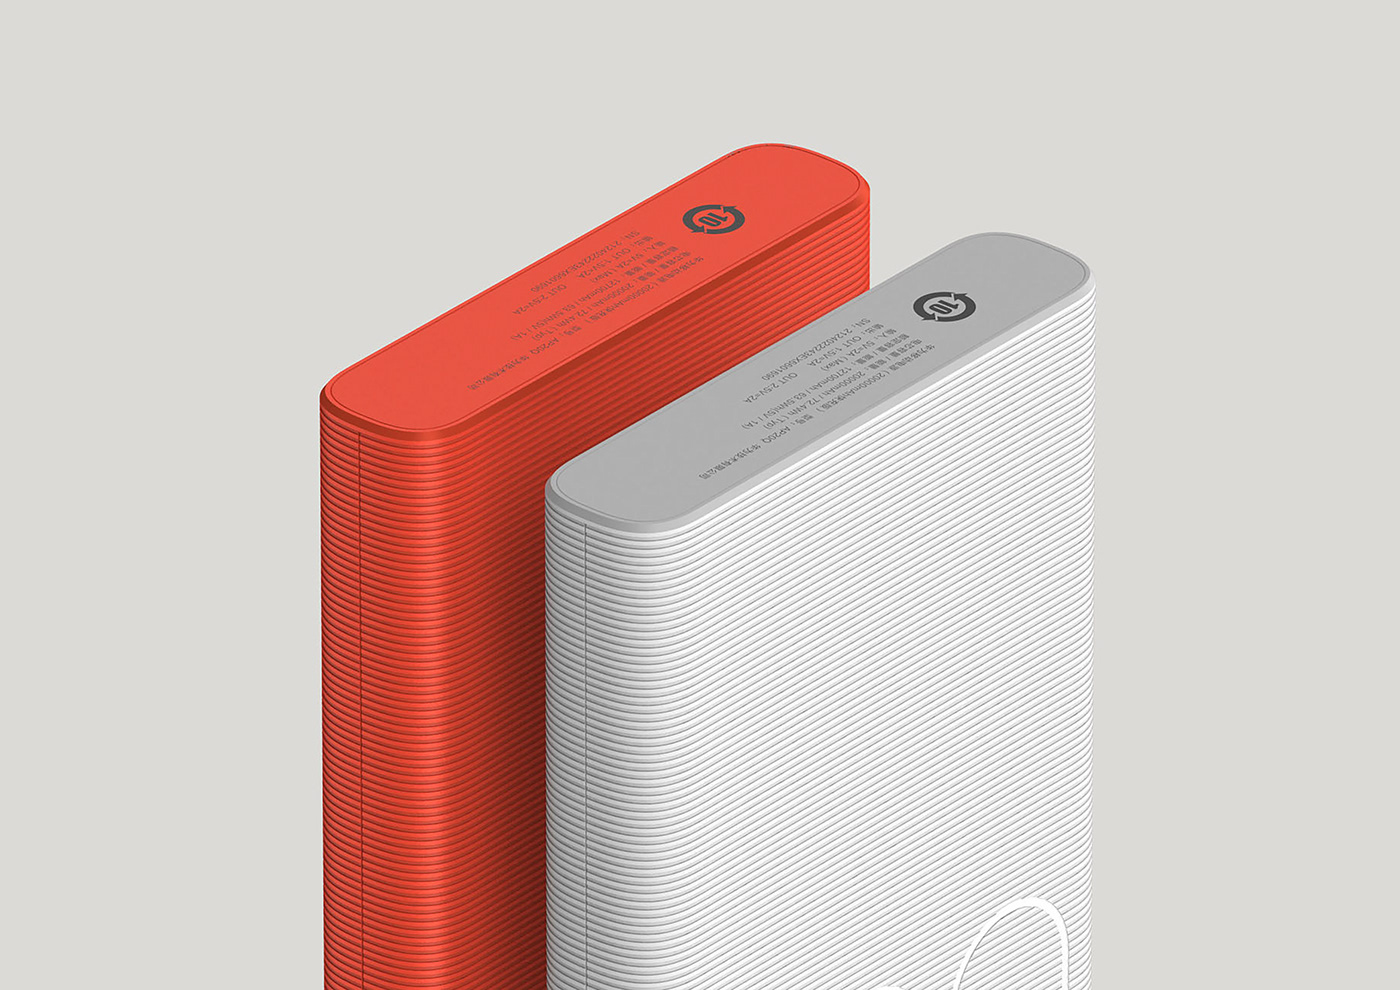 design iphone POWERBANK industrial design  product 3D smartphone 3C